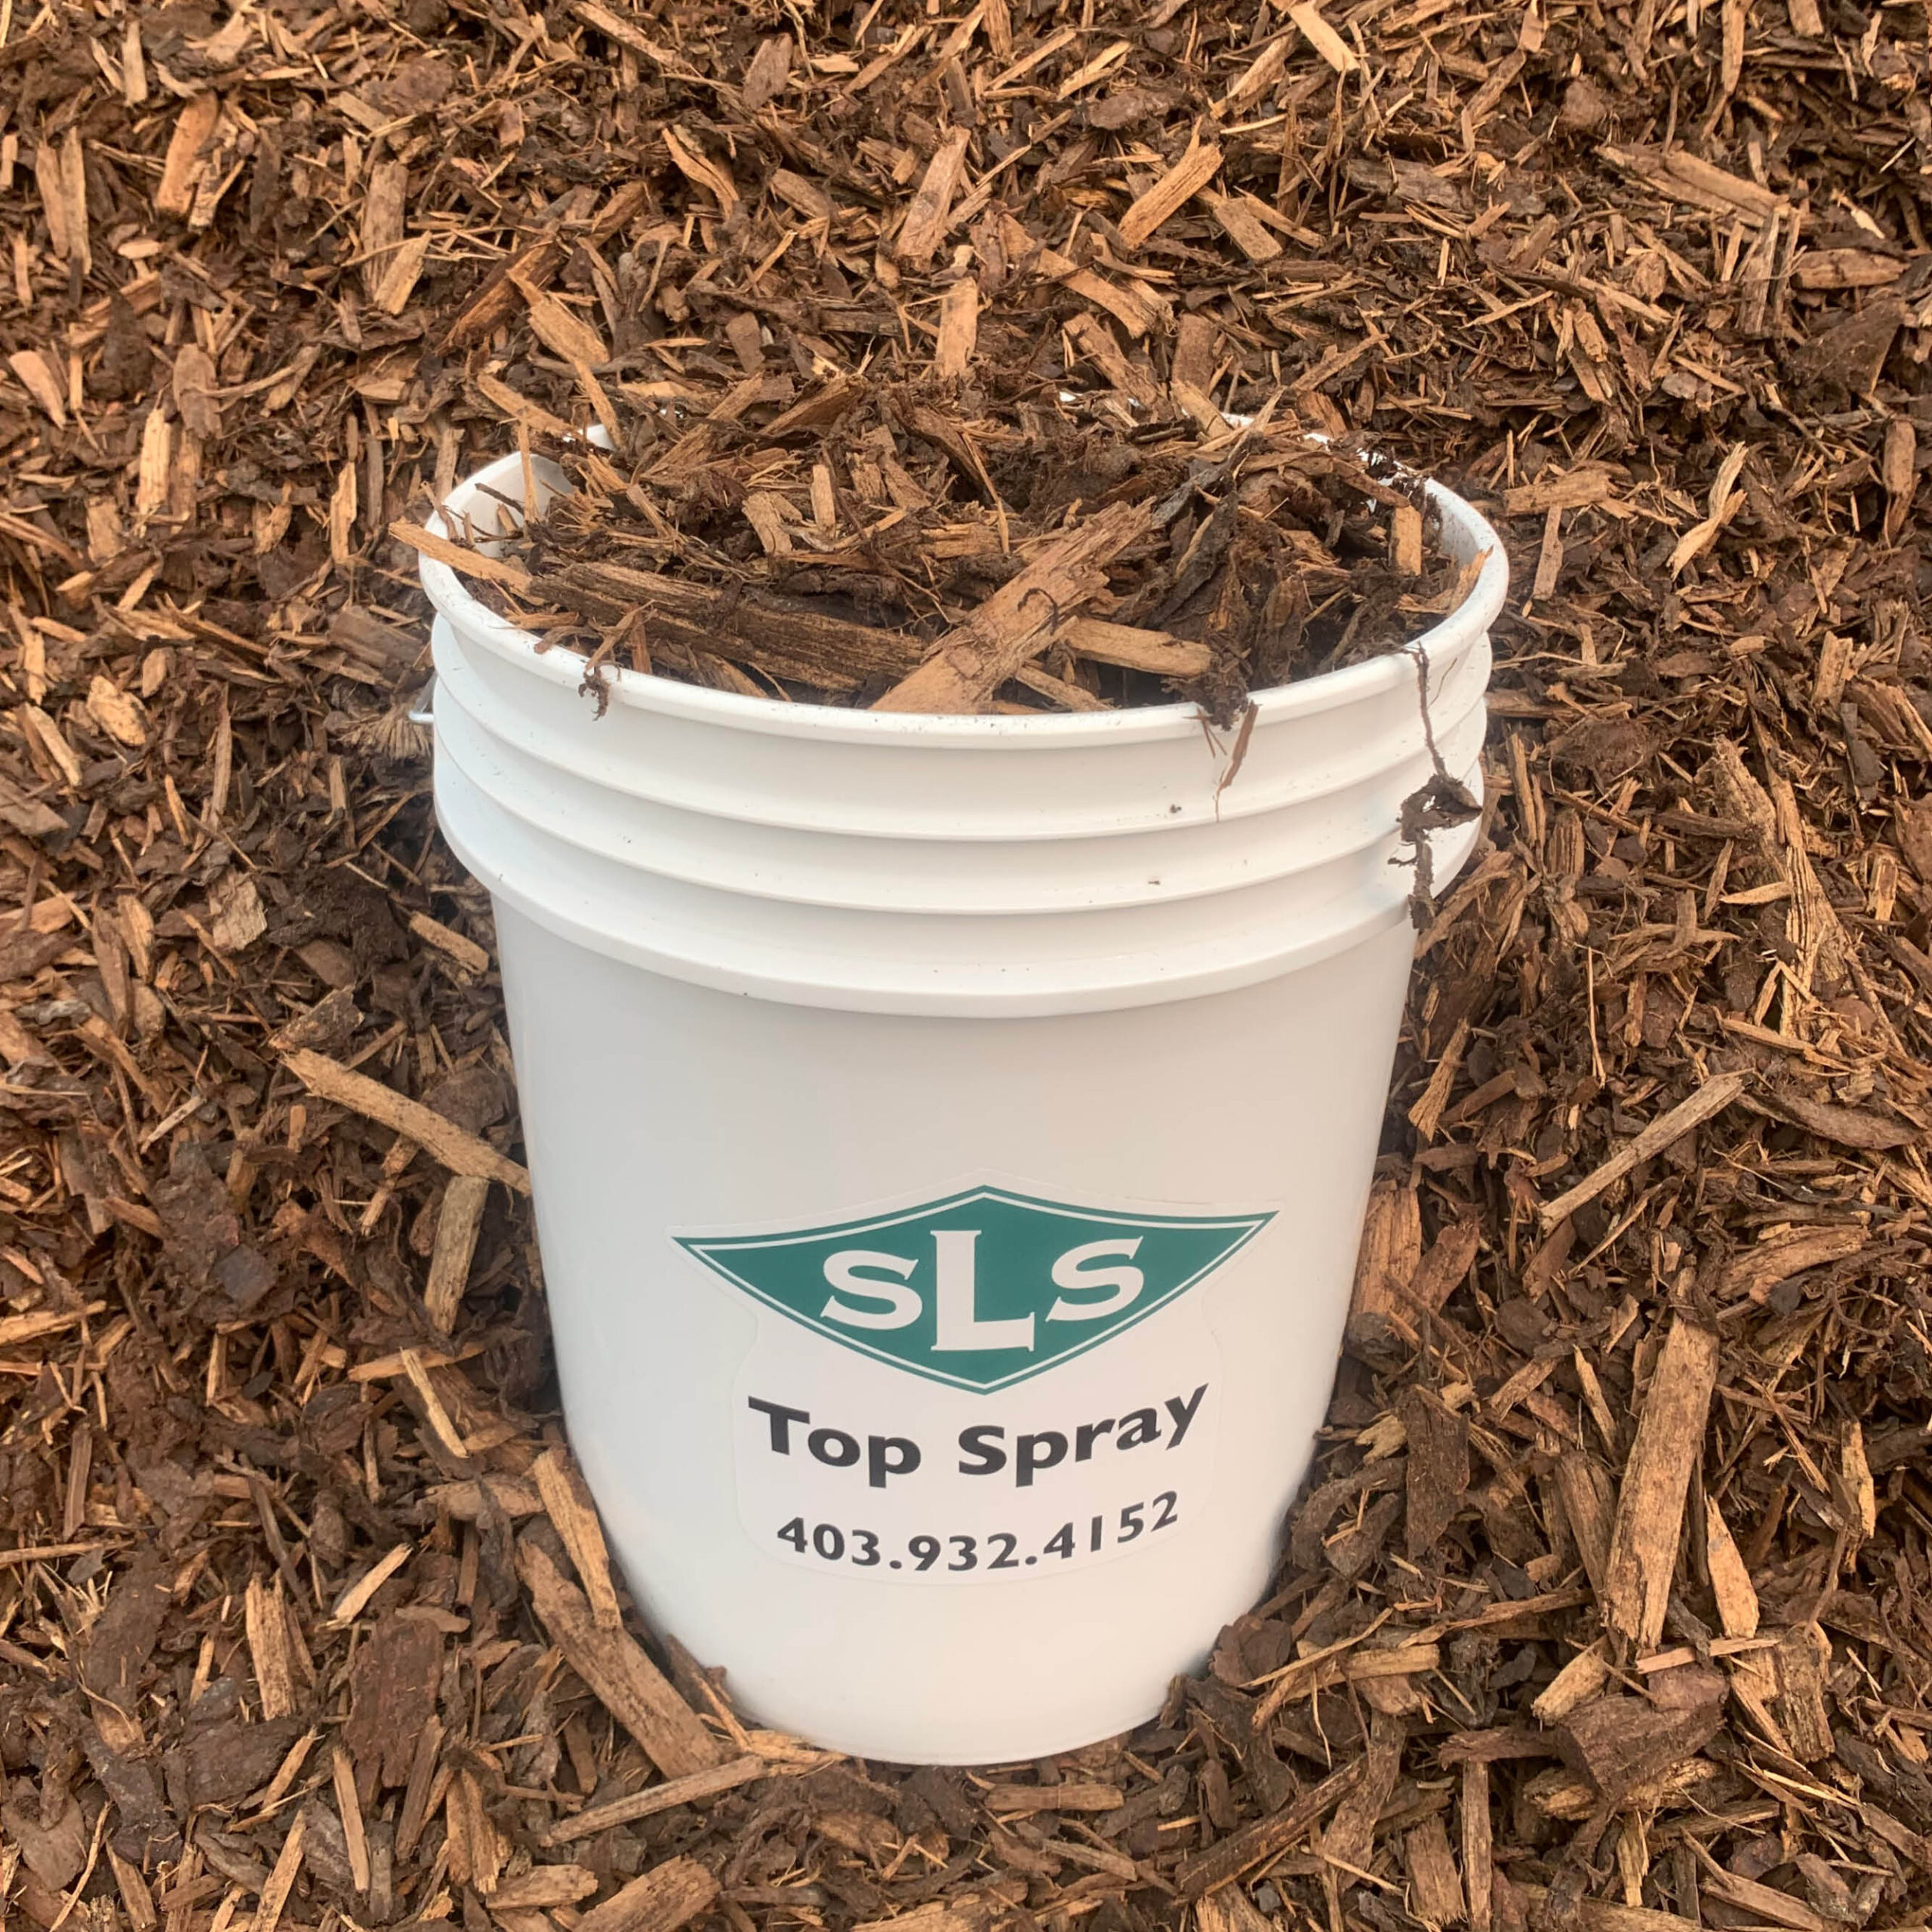 cochrane-mulch-soil-depot-top-spray